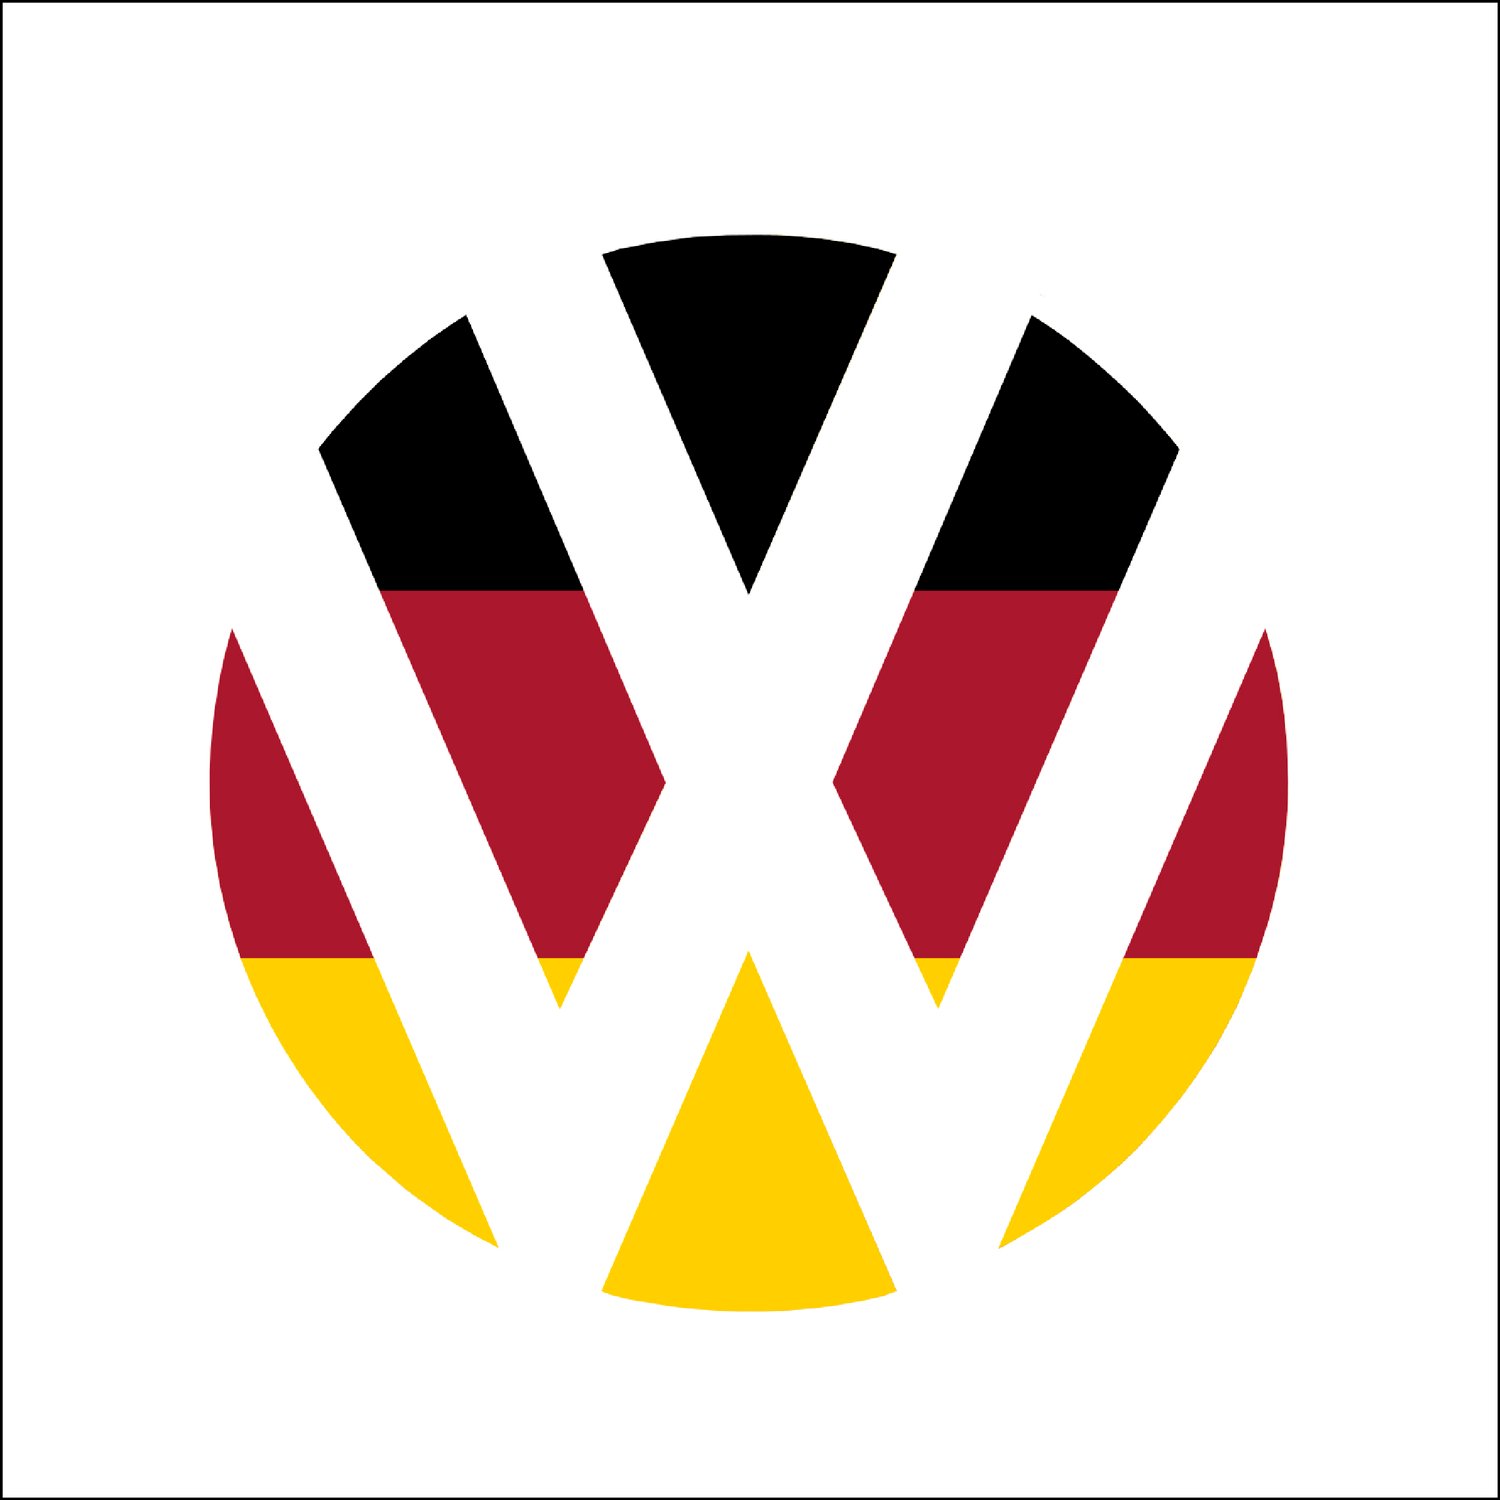 Image of Rear Badge Vinyl -Sticker bomb-German Flag-Carbon Fiber-White fits: MK6 Jetta SportWagen 